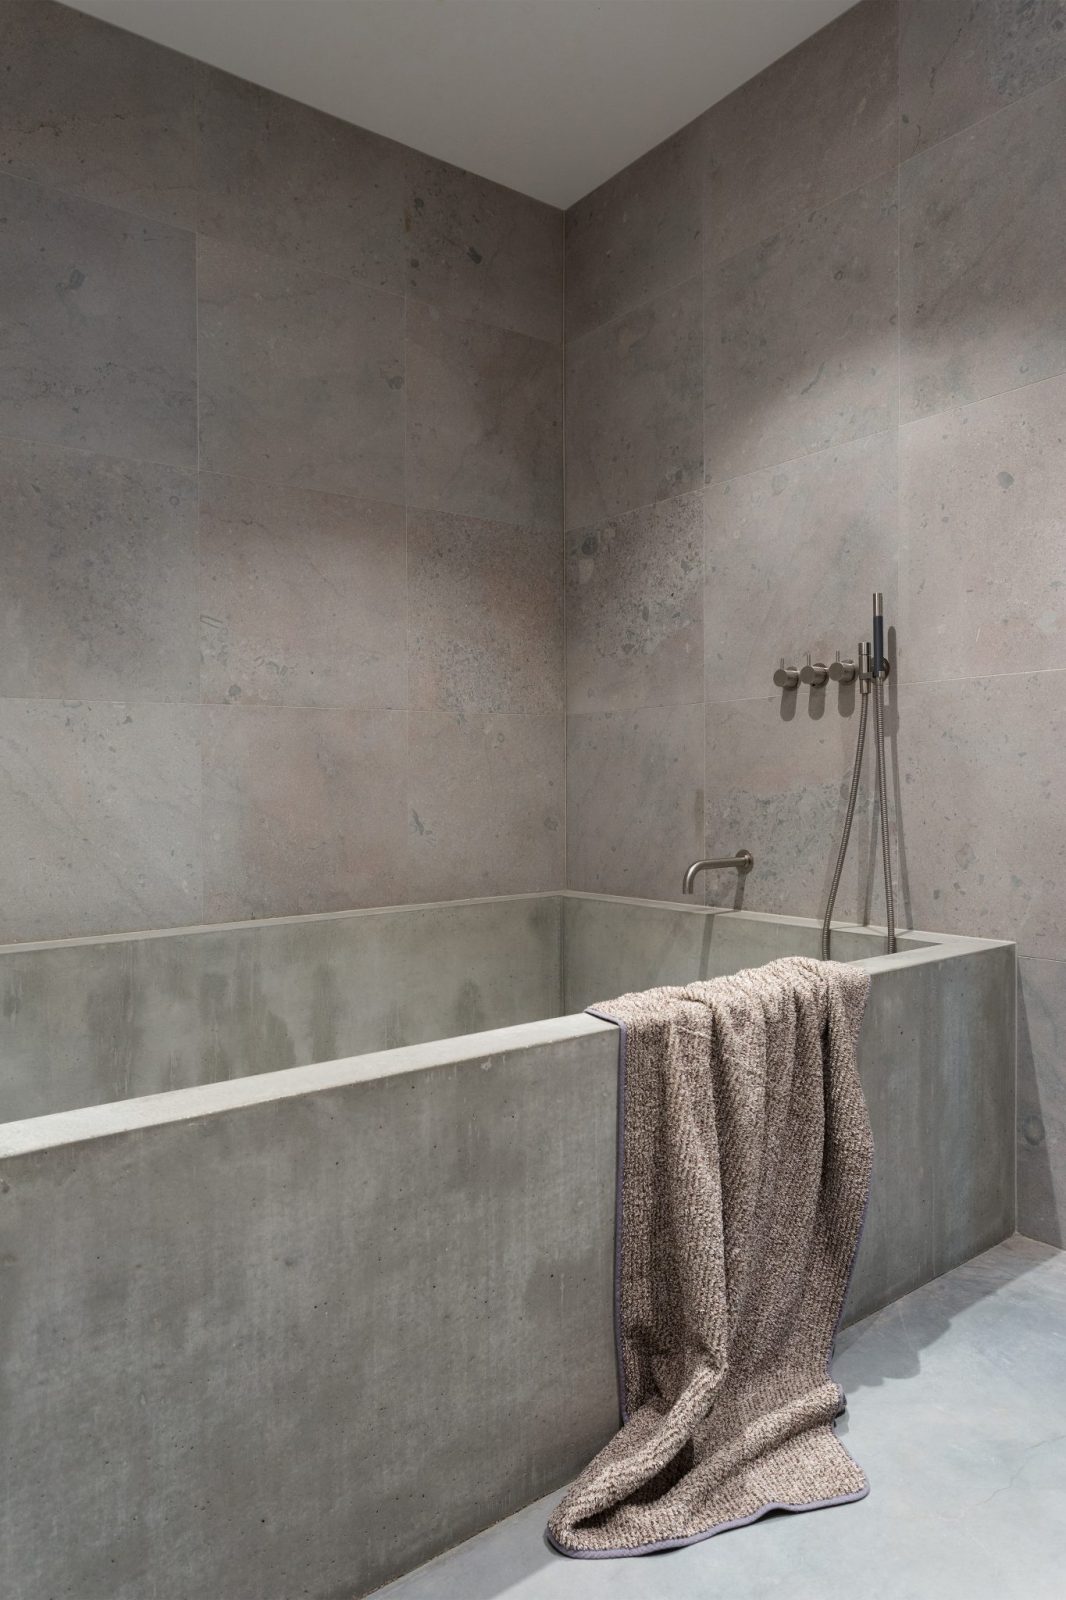 concrete bathtub. source: richardlindvall.com